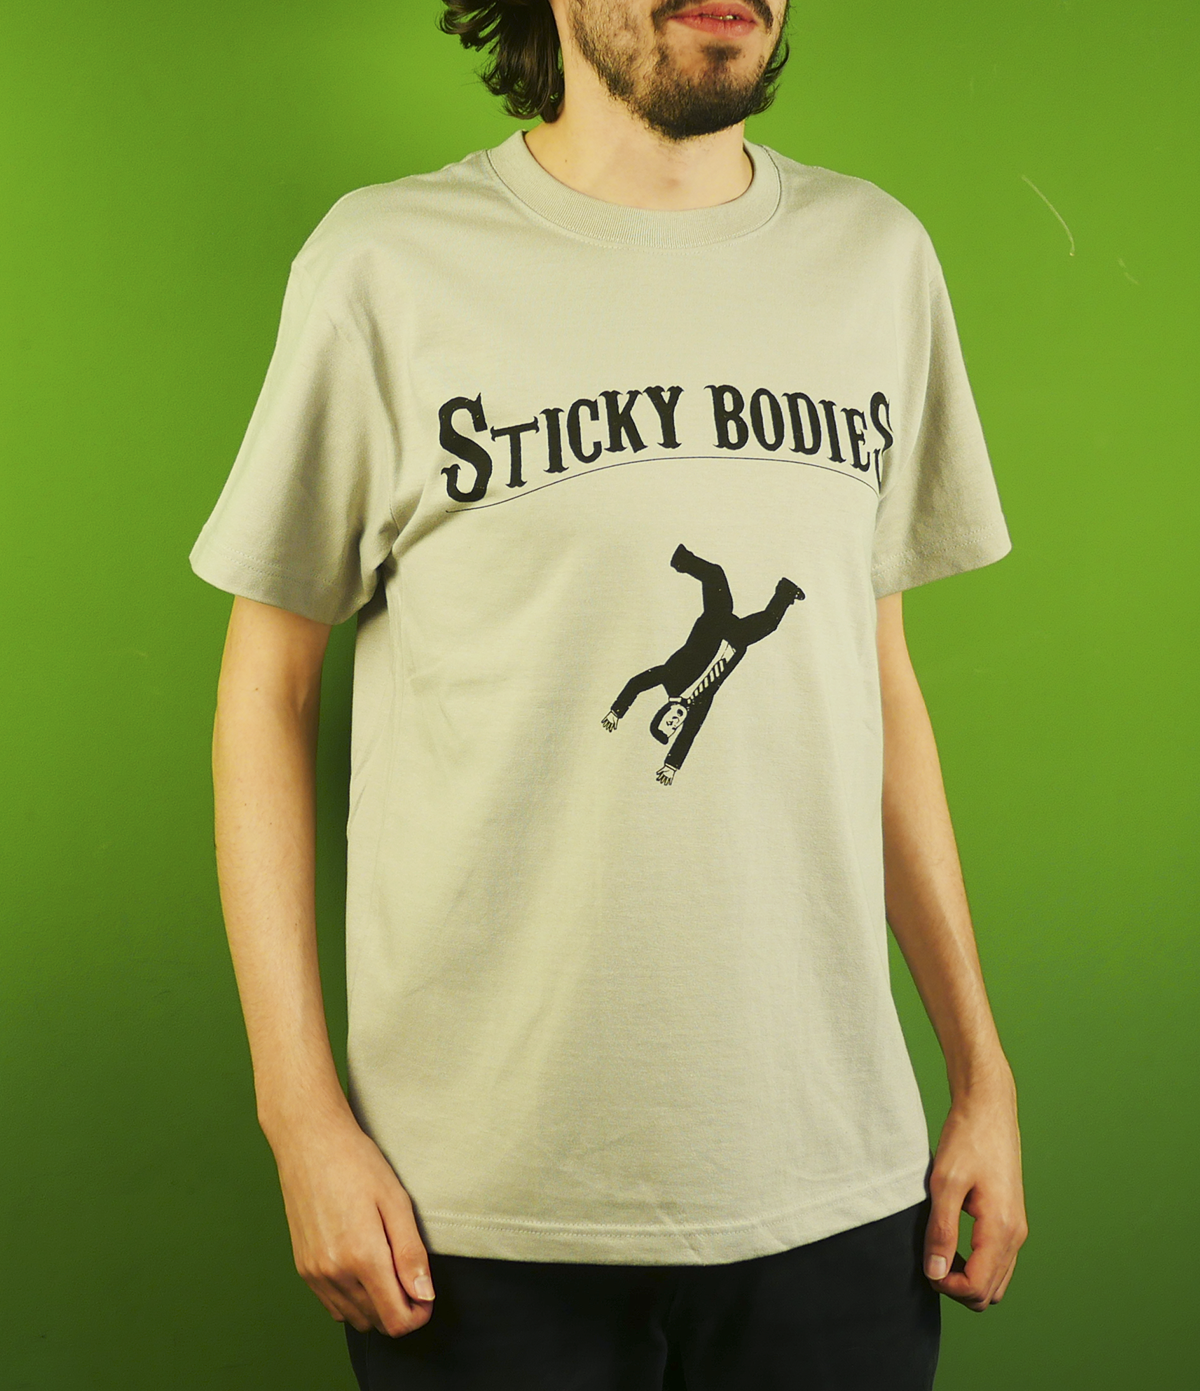 Sticky Bodies t-shirt